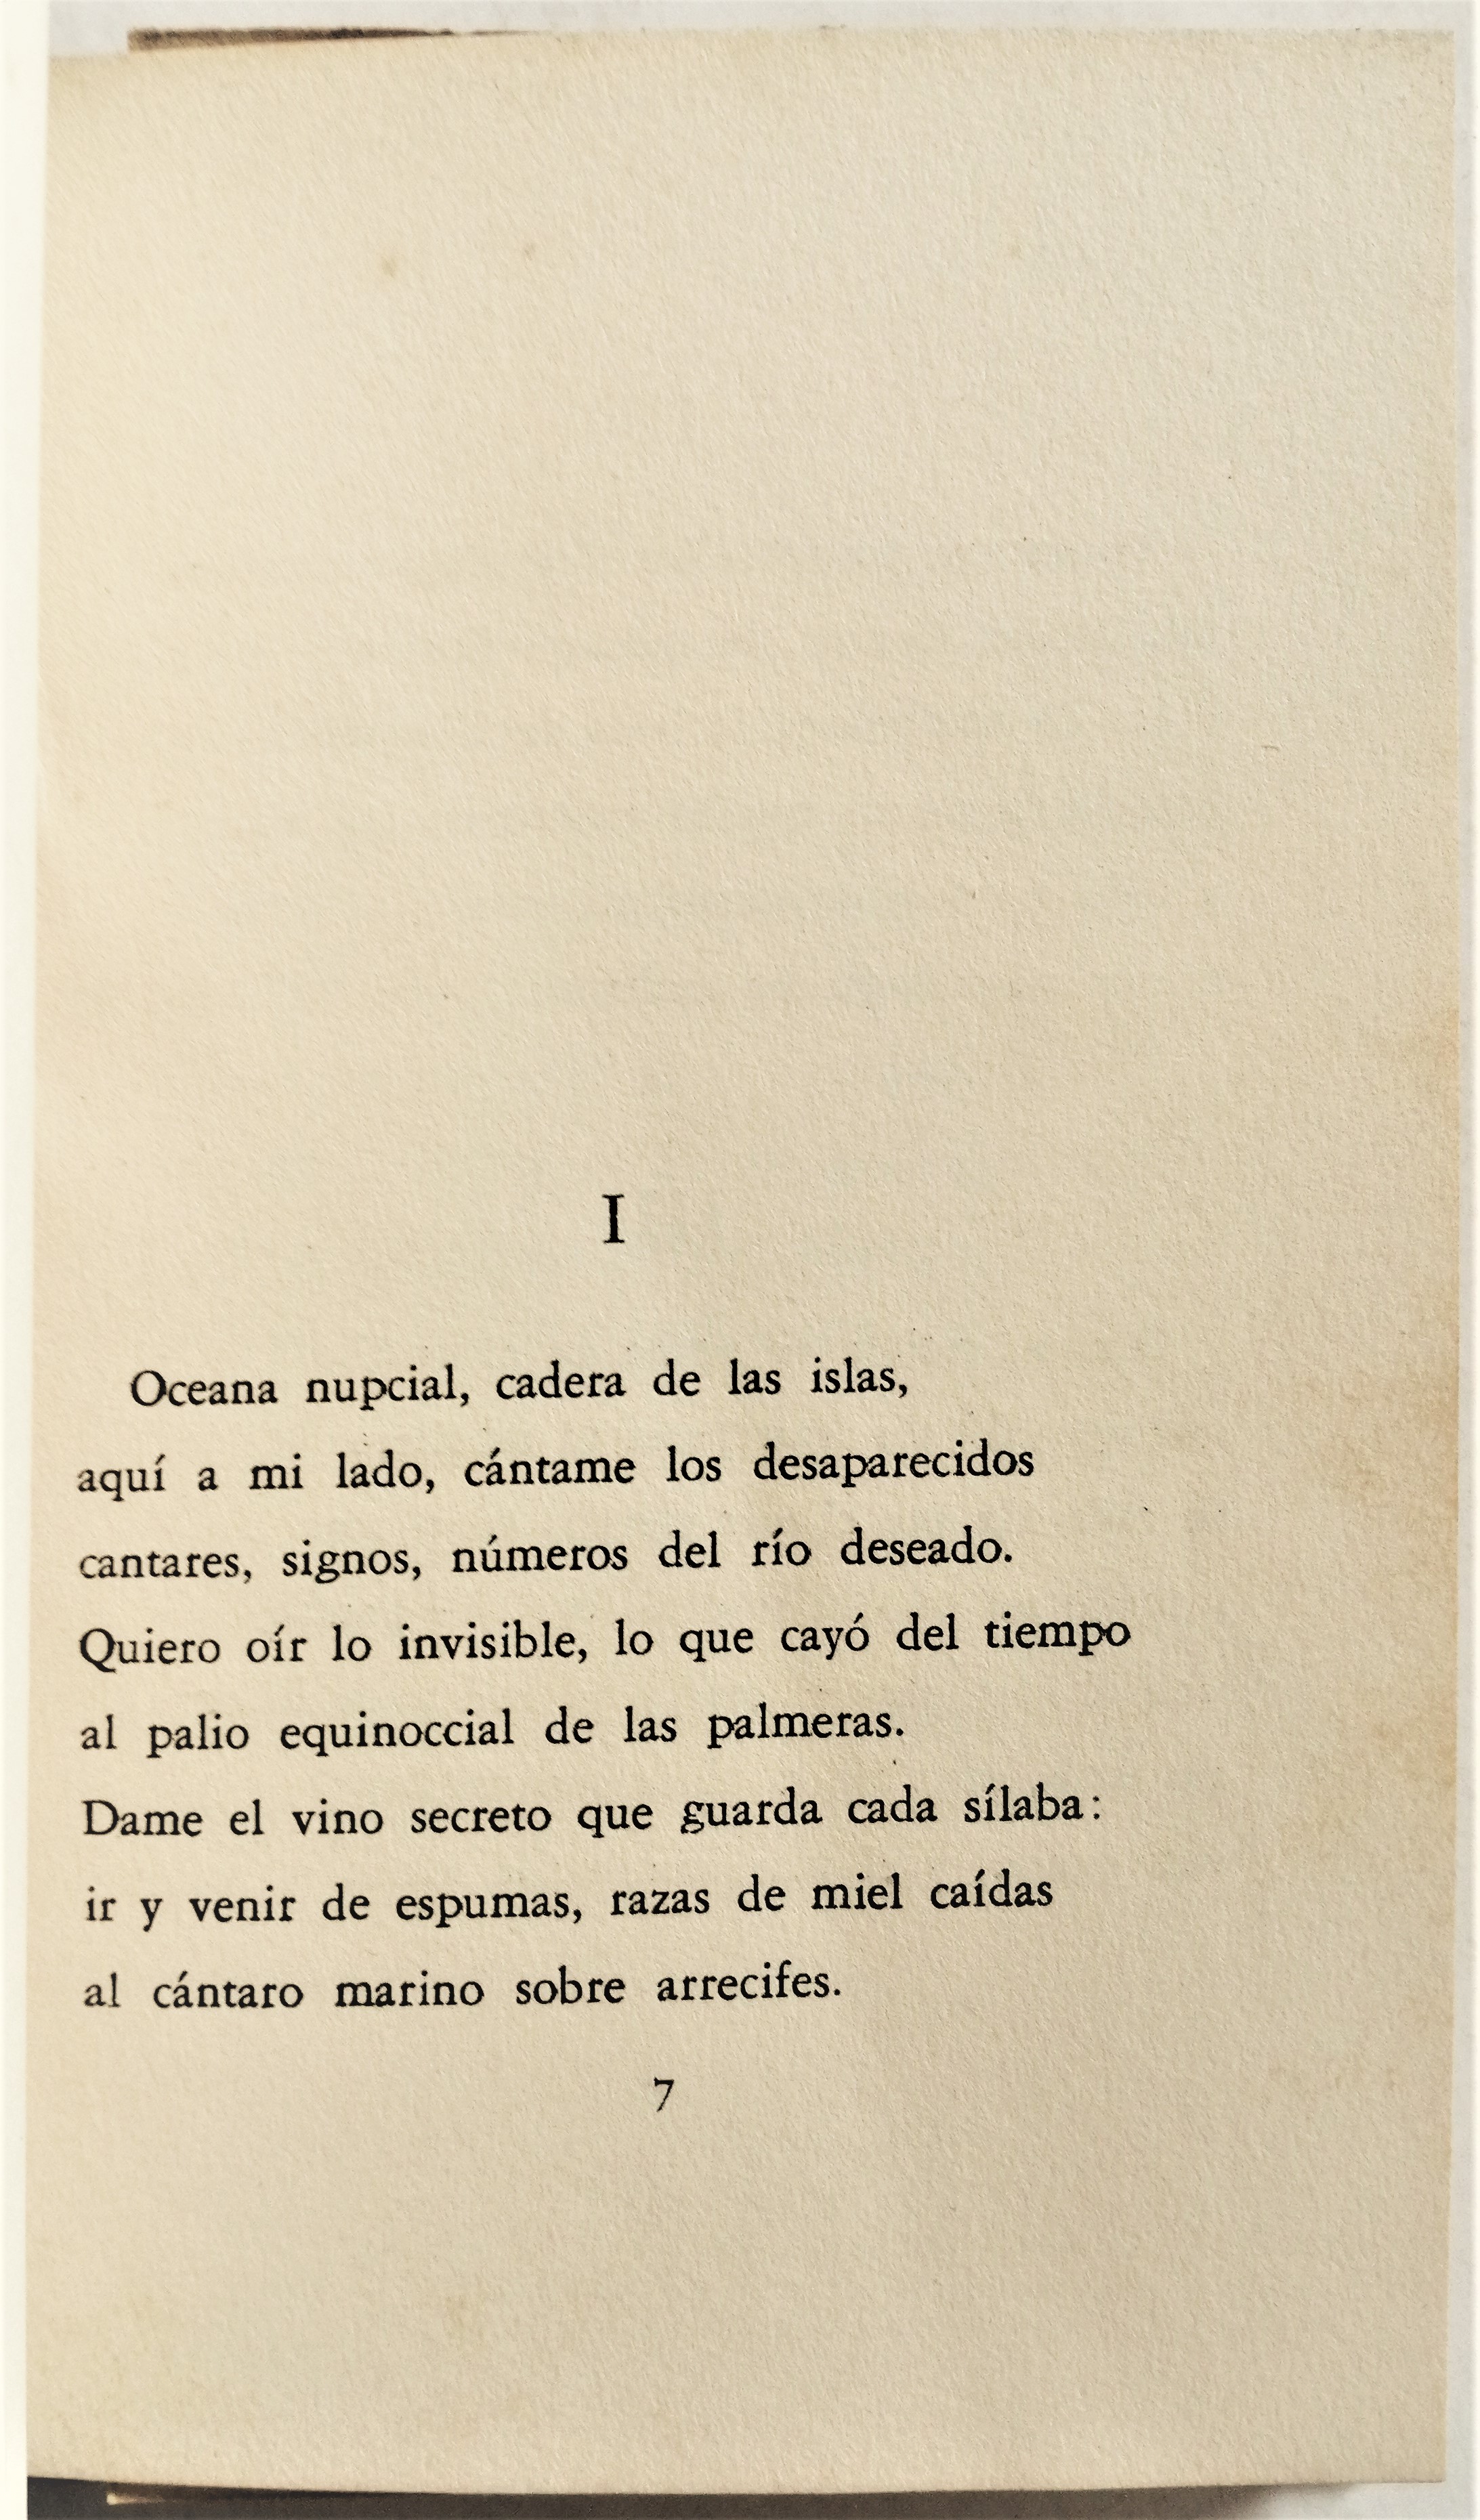 Pablo Neruda - Oceana